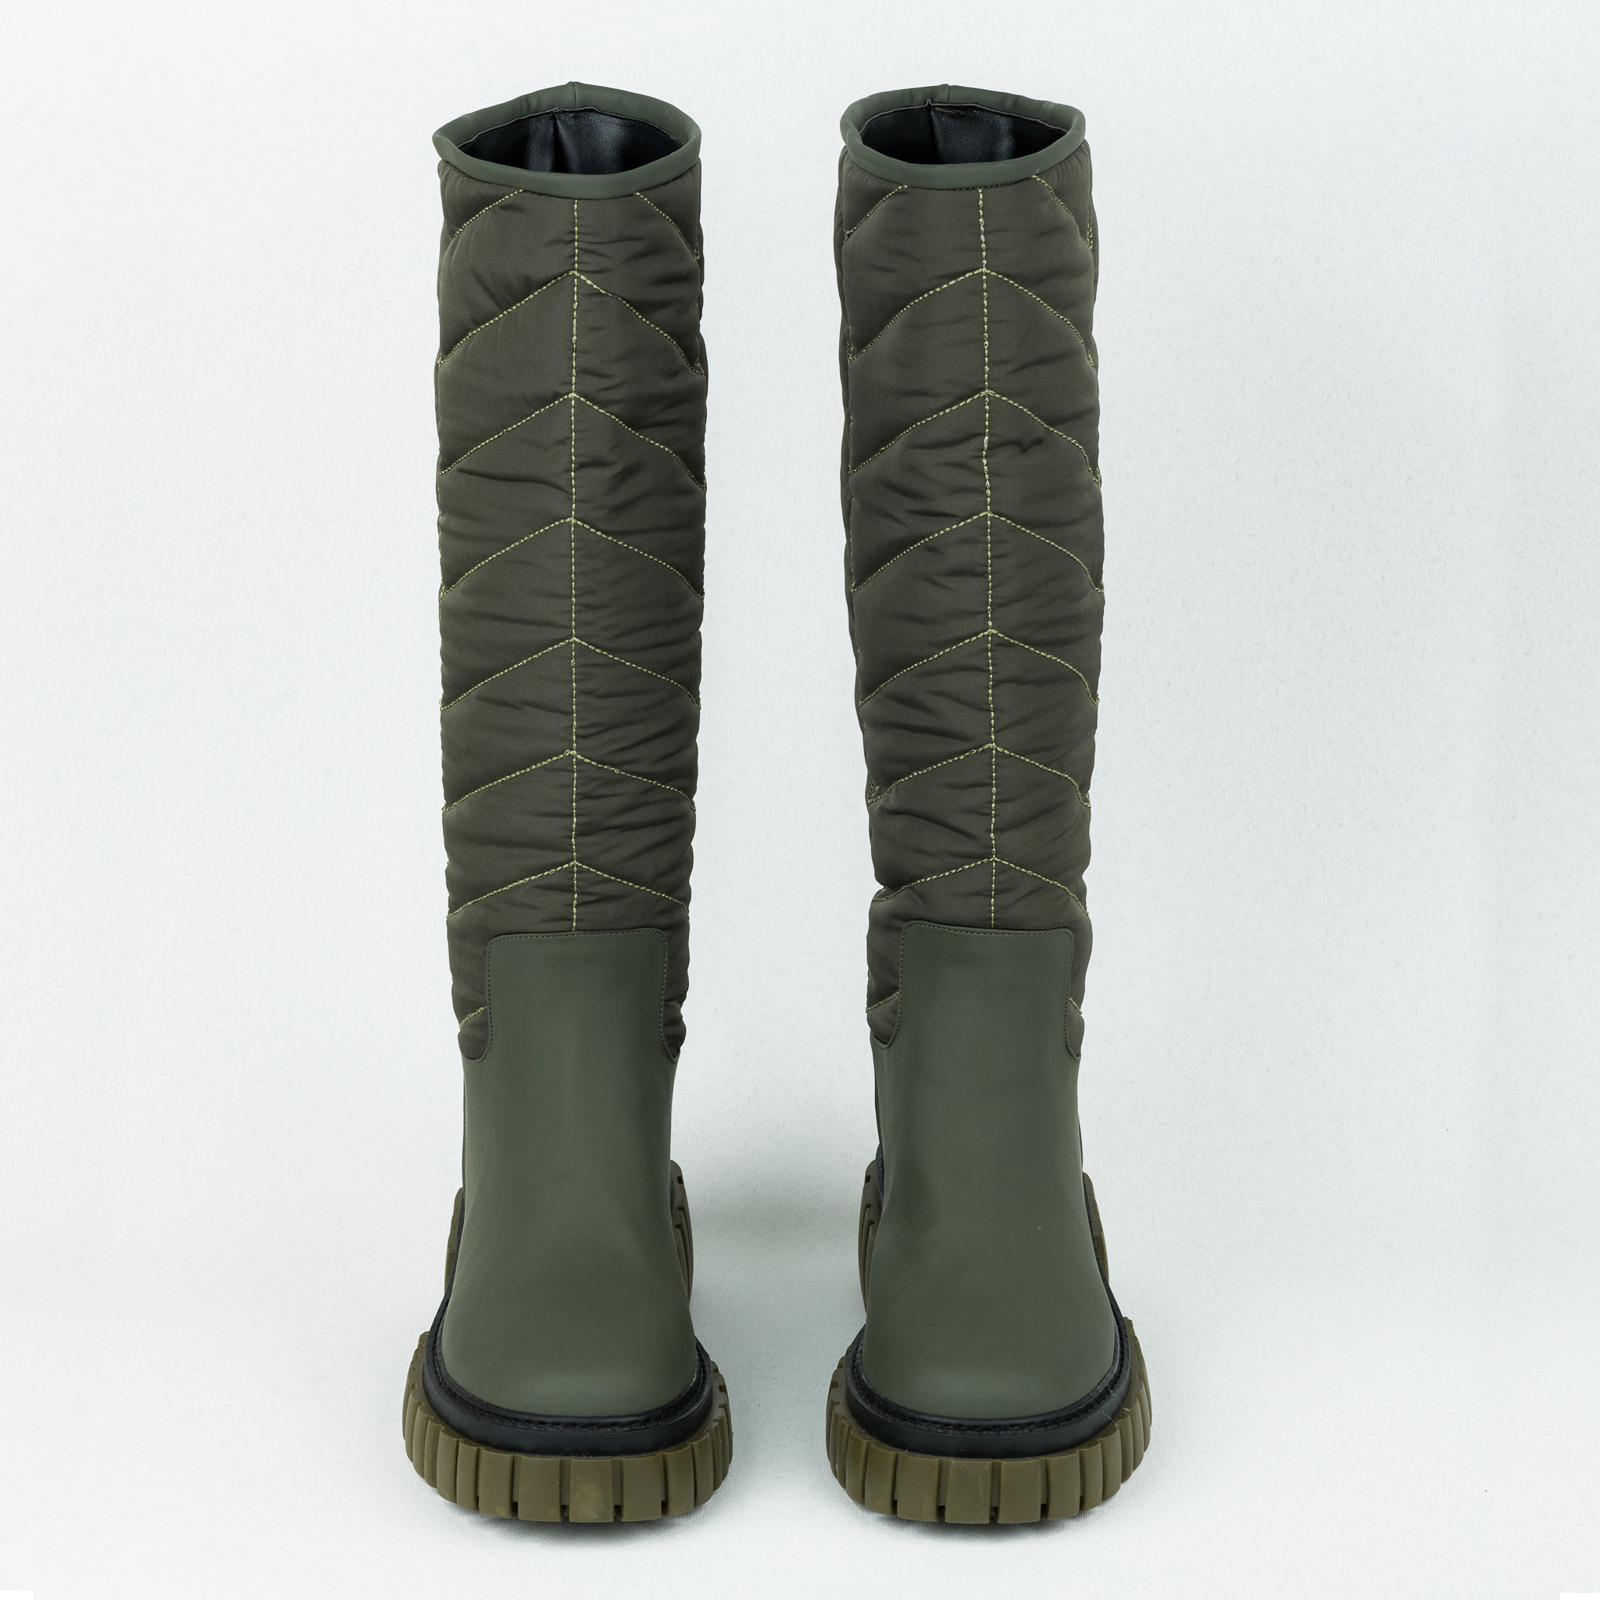 Waterproof boots B641 - GREY